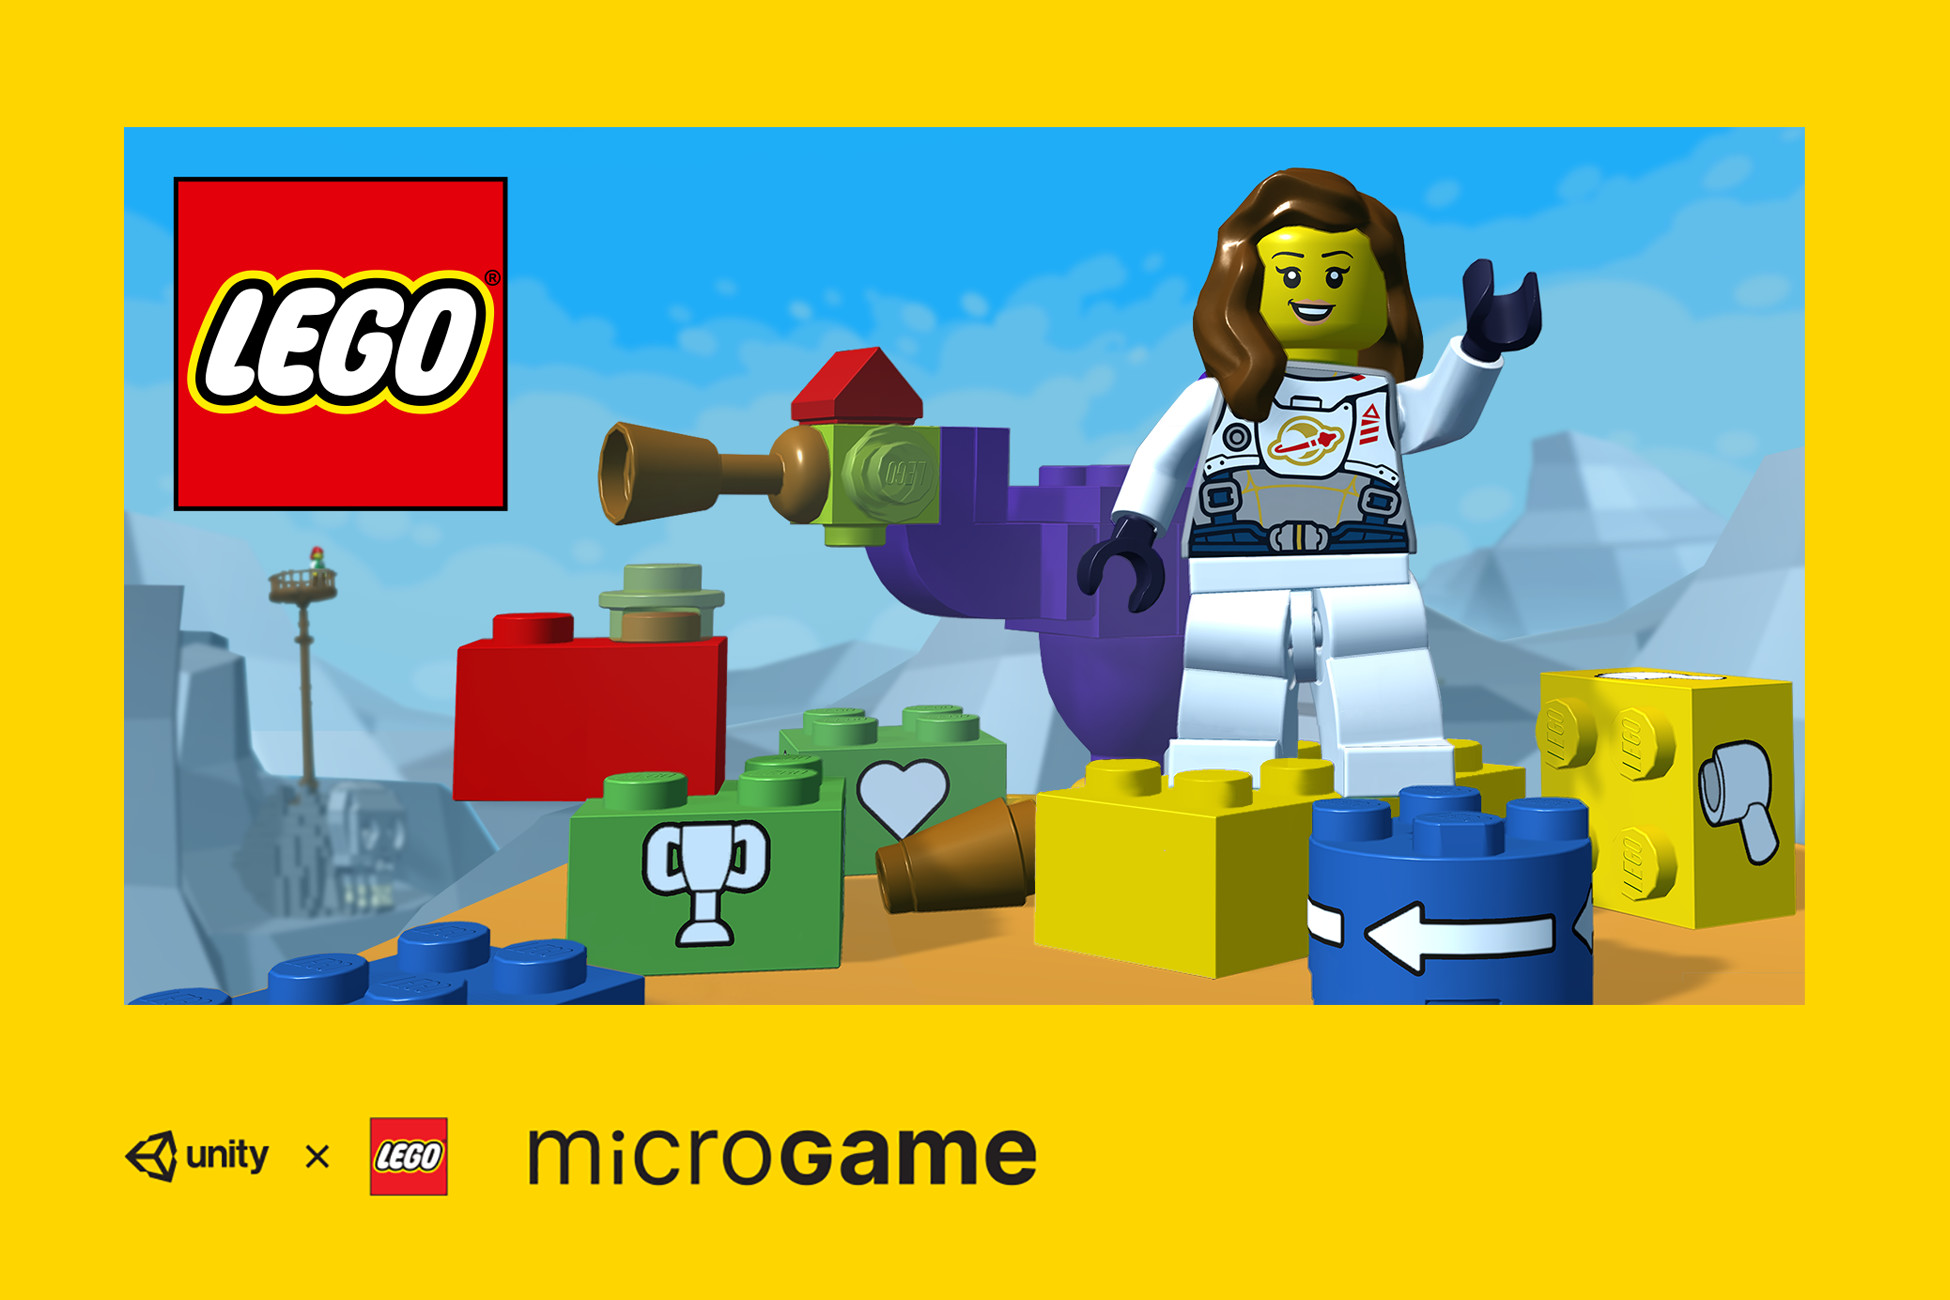 Lego Islands microgame